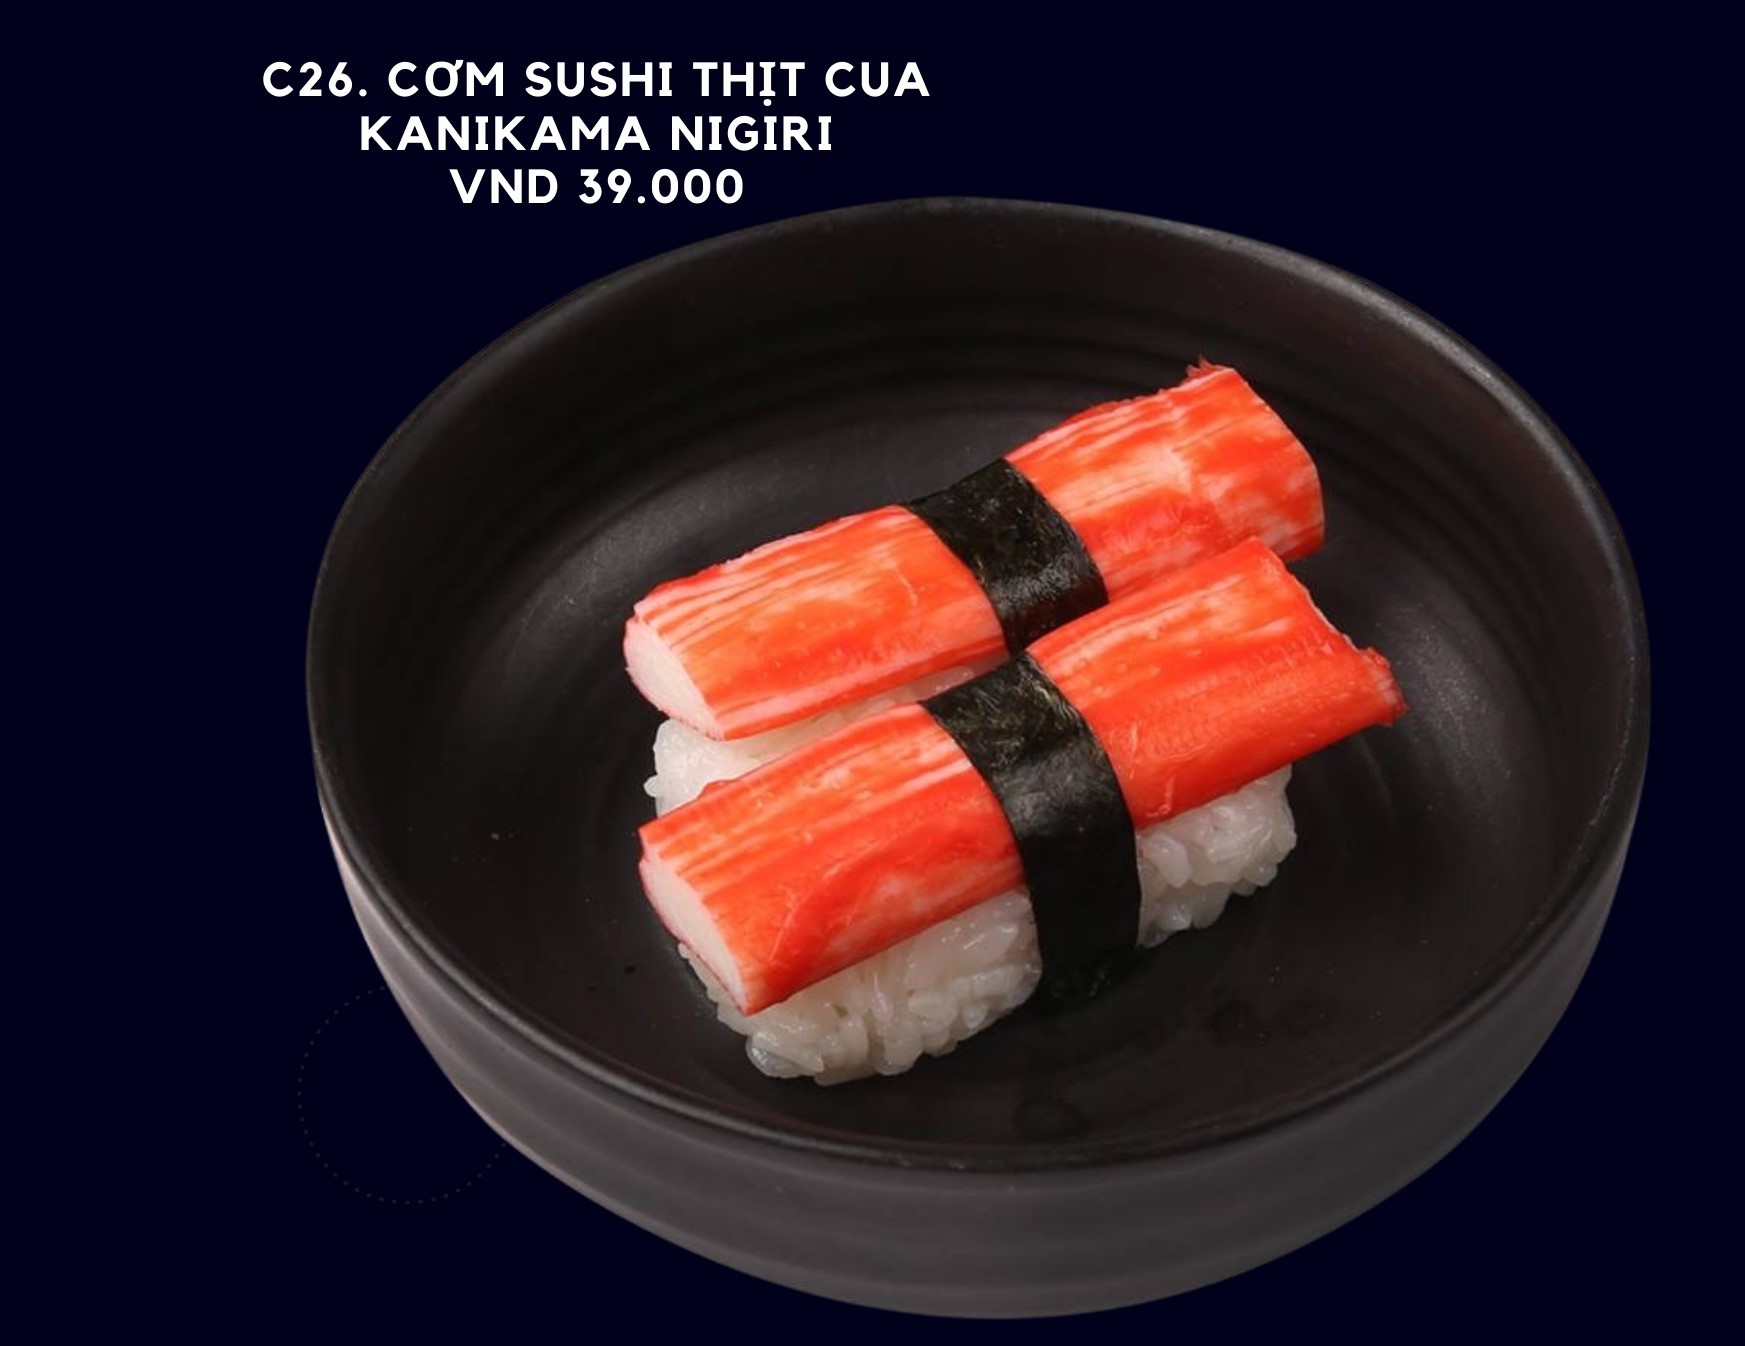 C11. Cơm sushi cuốn rong biển thịt cua Kanikama maki